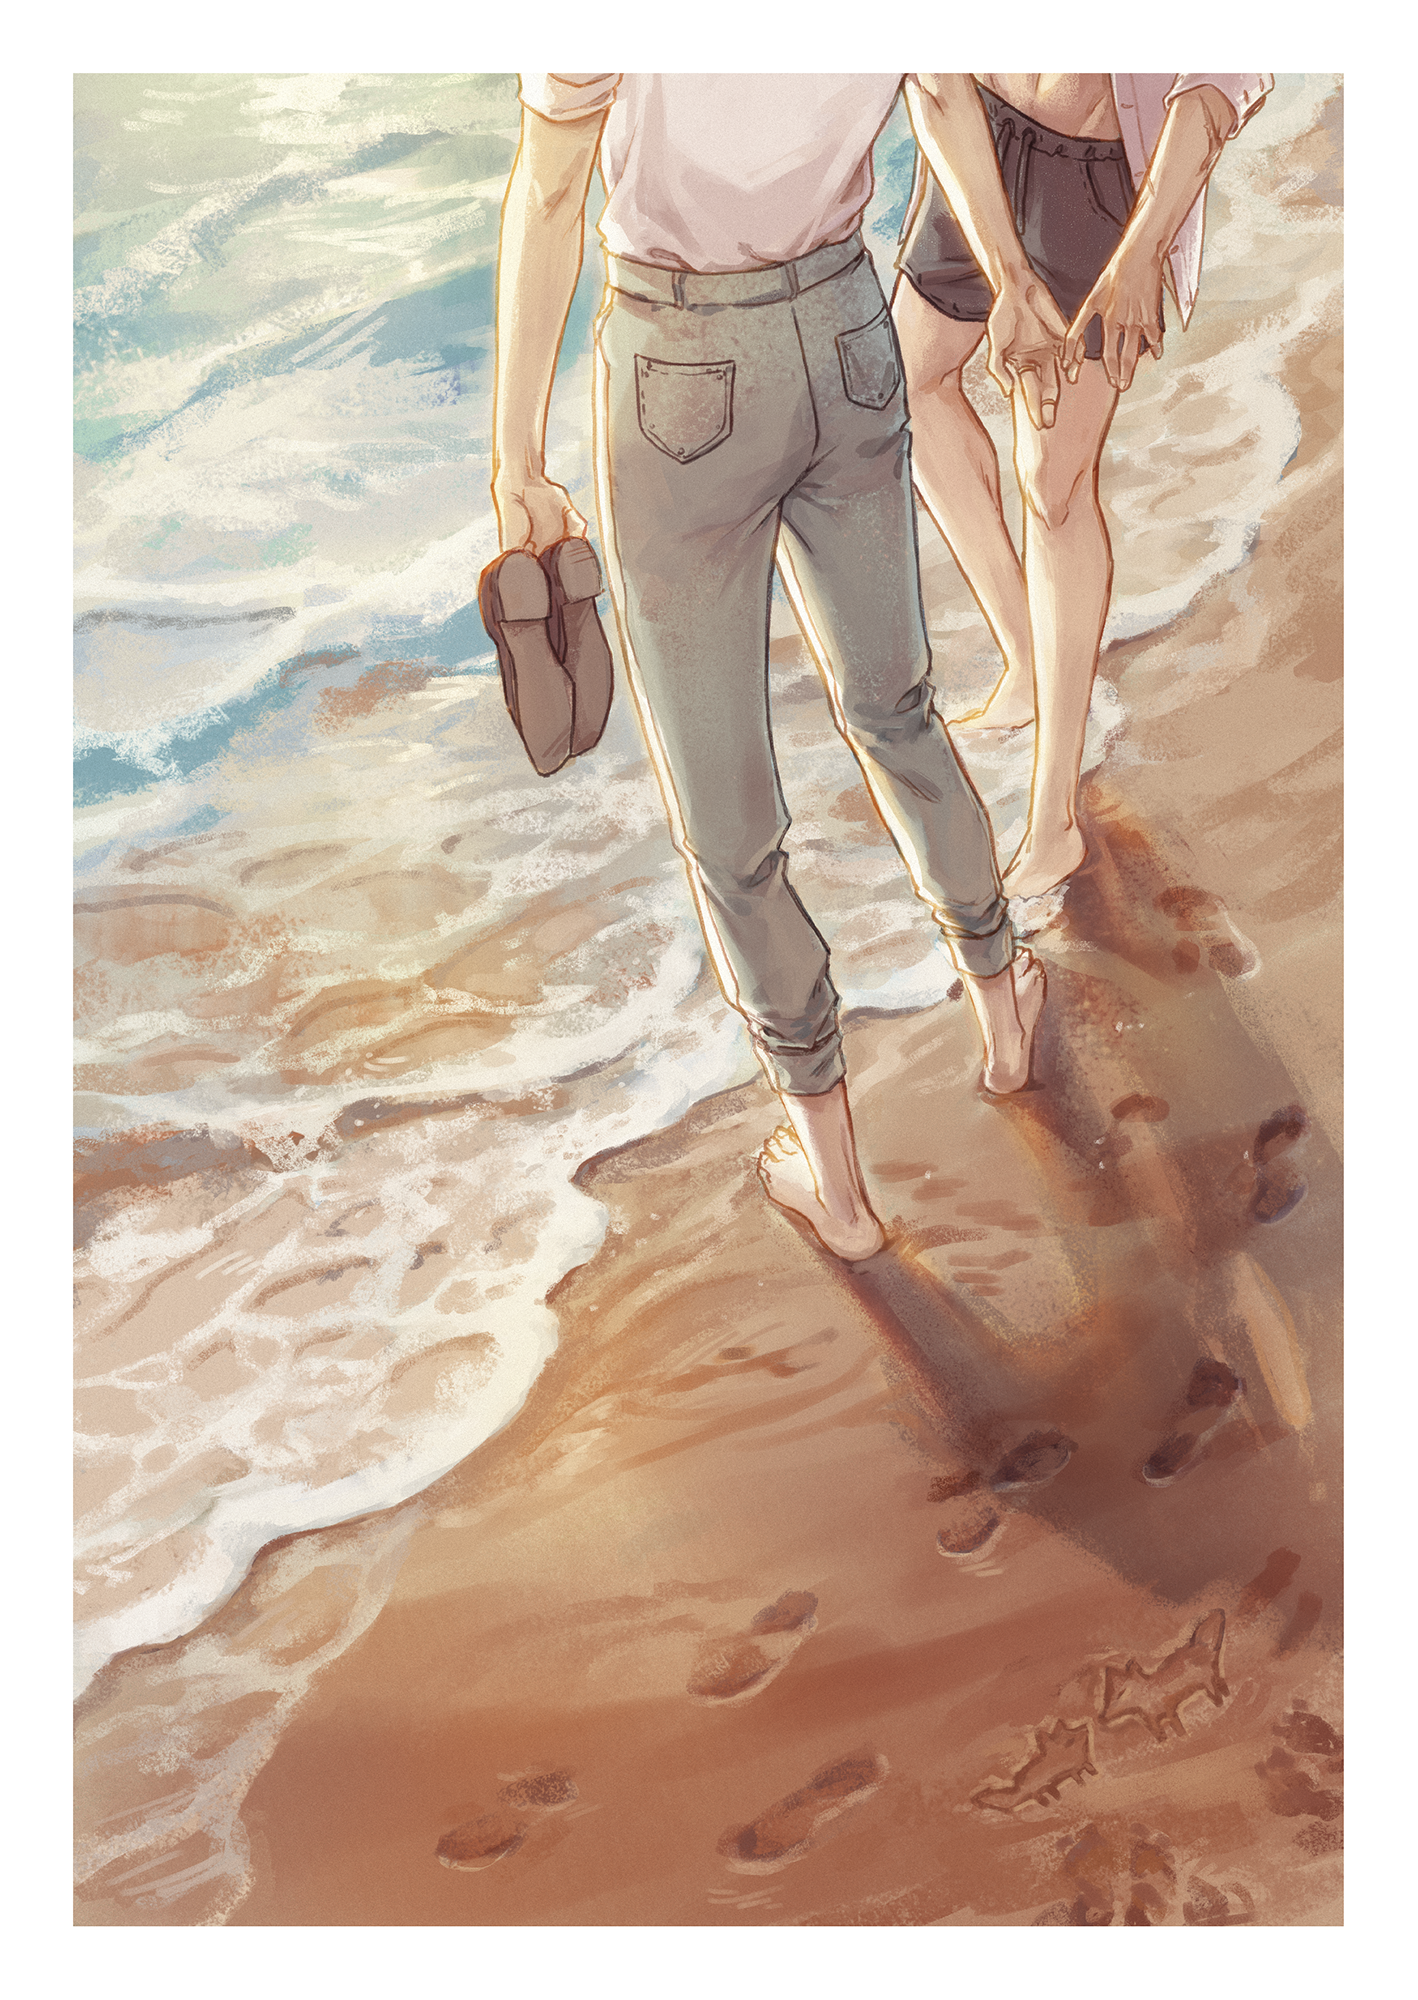 After The Storm Beach | Print - Aurigae Art &Illustration